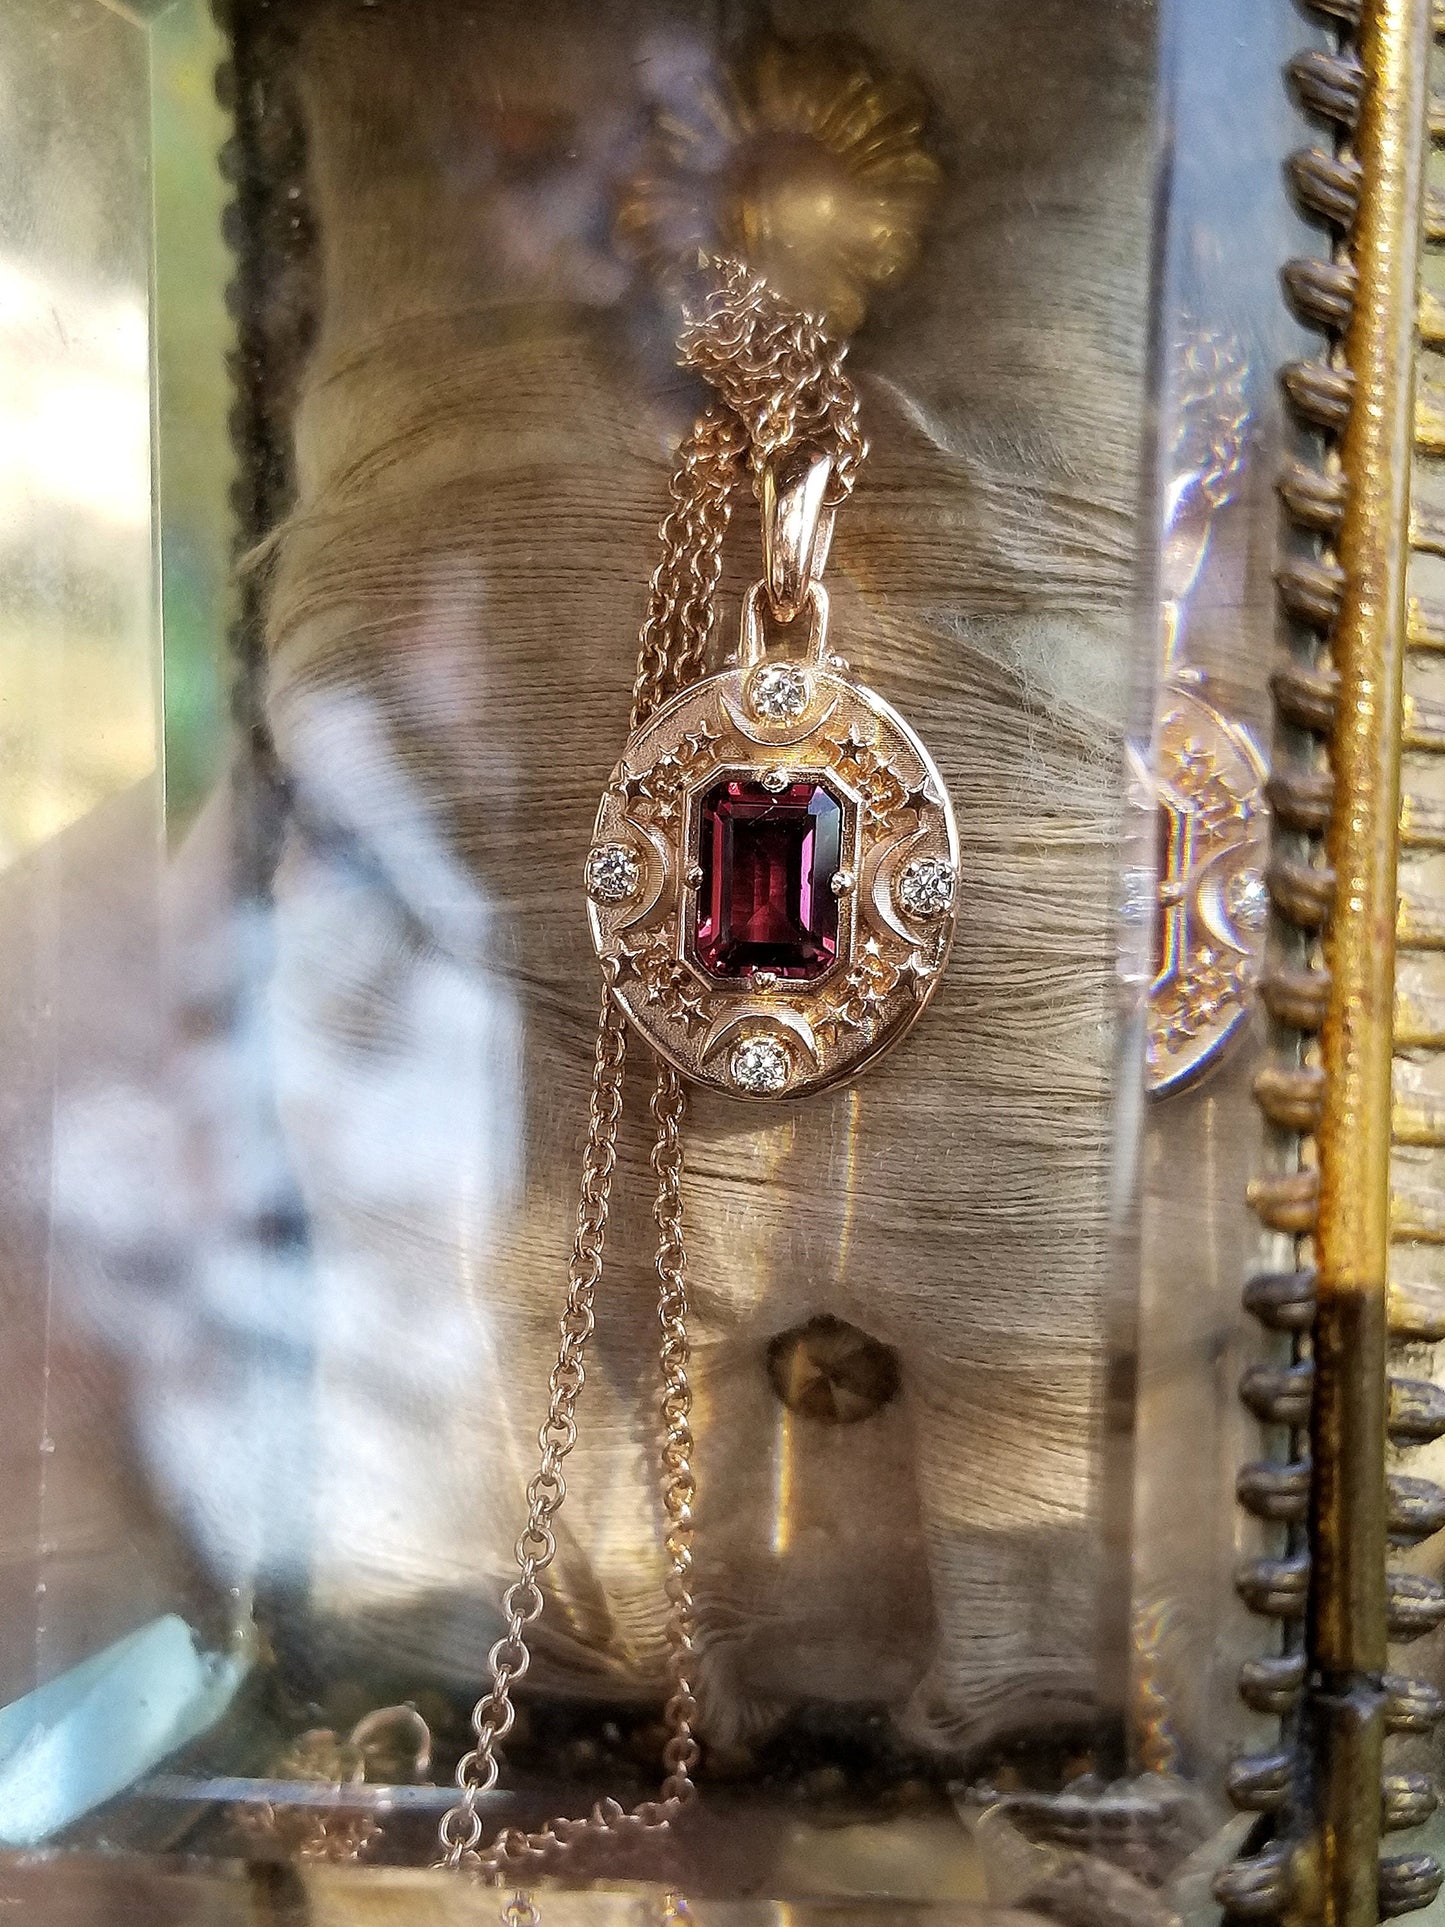 Artemis Pendant with Emerald Cut Rhodolite Garnet and Diamonds - 14k Rose Gold Handmade Jewelry with Crescent Moon & Stars